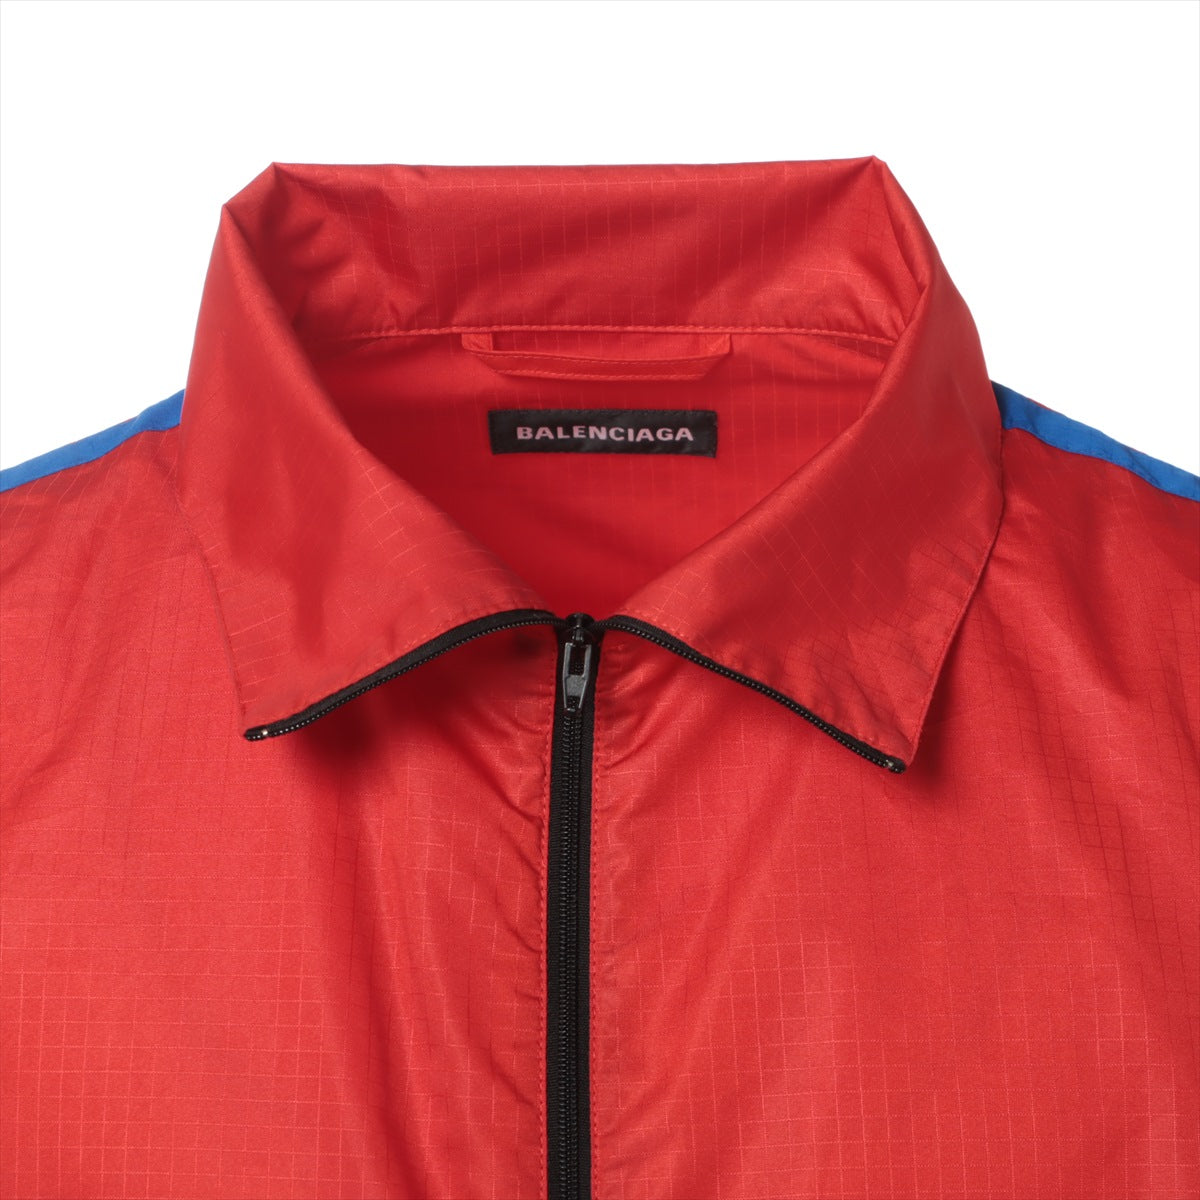 Balenciaga 18 years Polyester Jacket 44 Men's Red x Black  534317